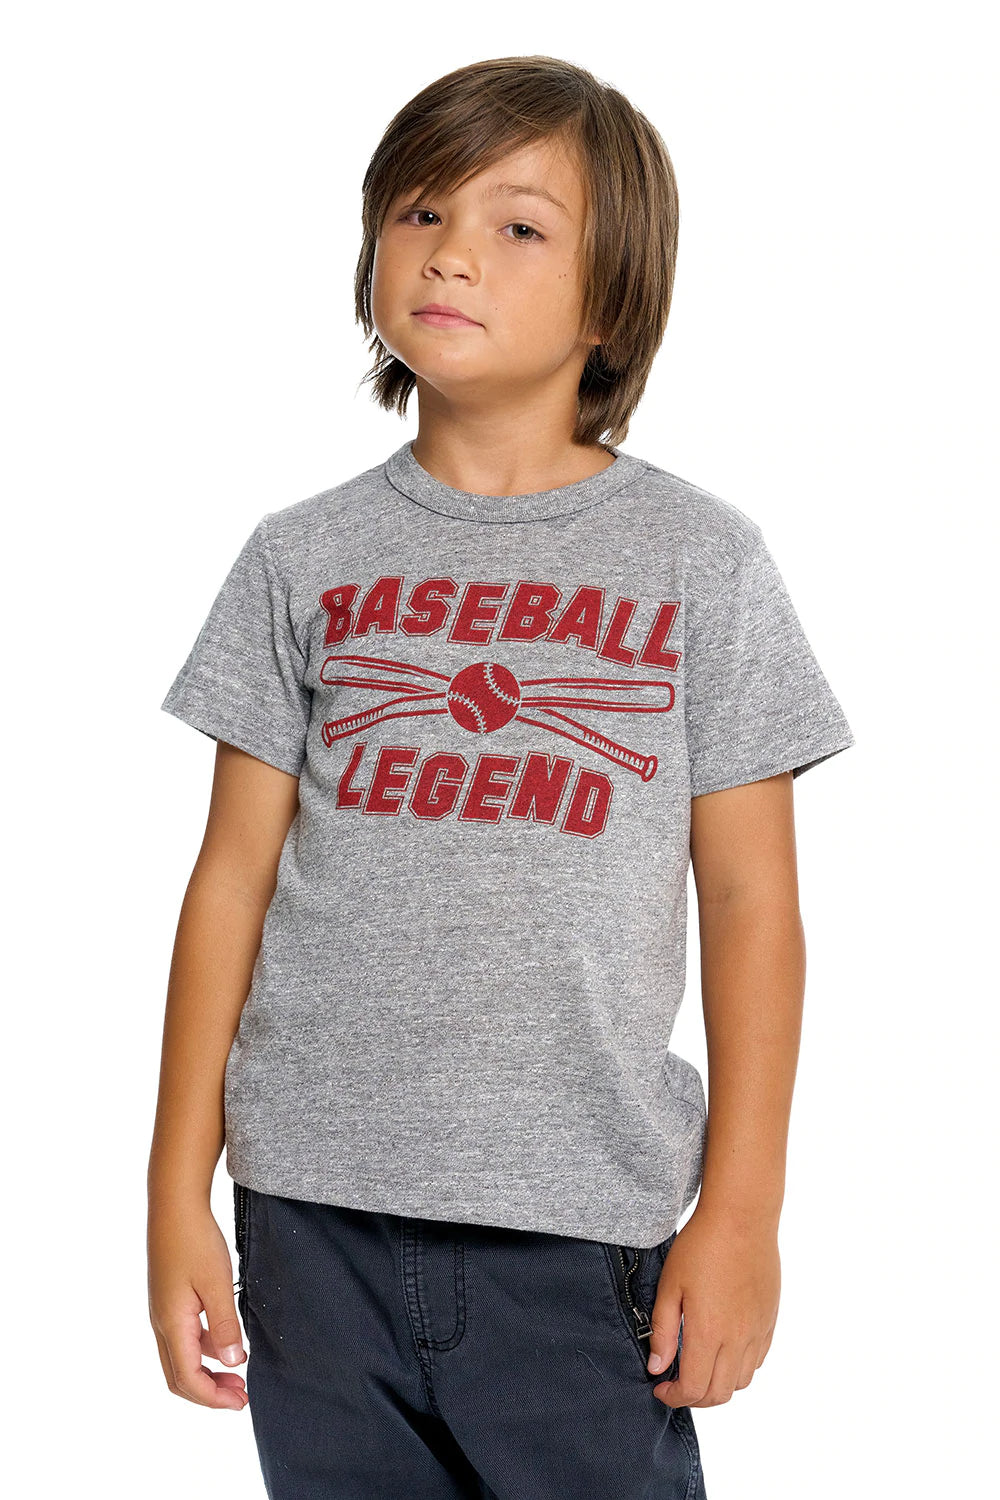 Baseball Legend Crew Neck Tee  - Doodlebug's Children's Boutique